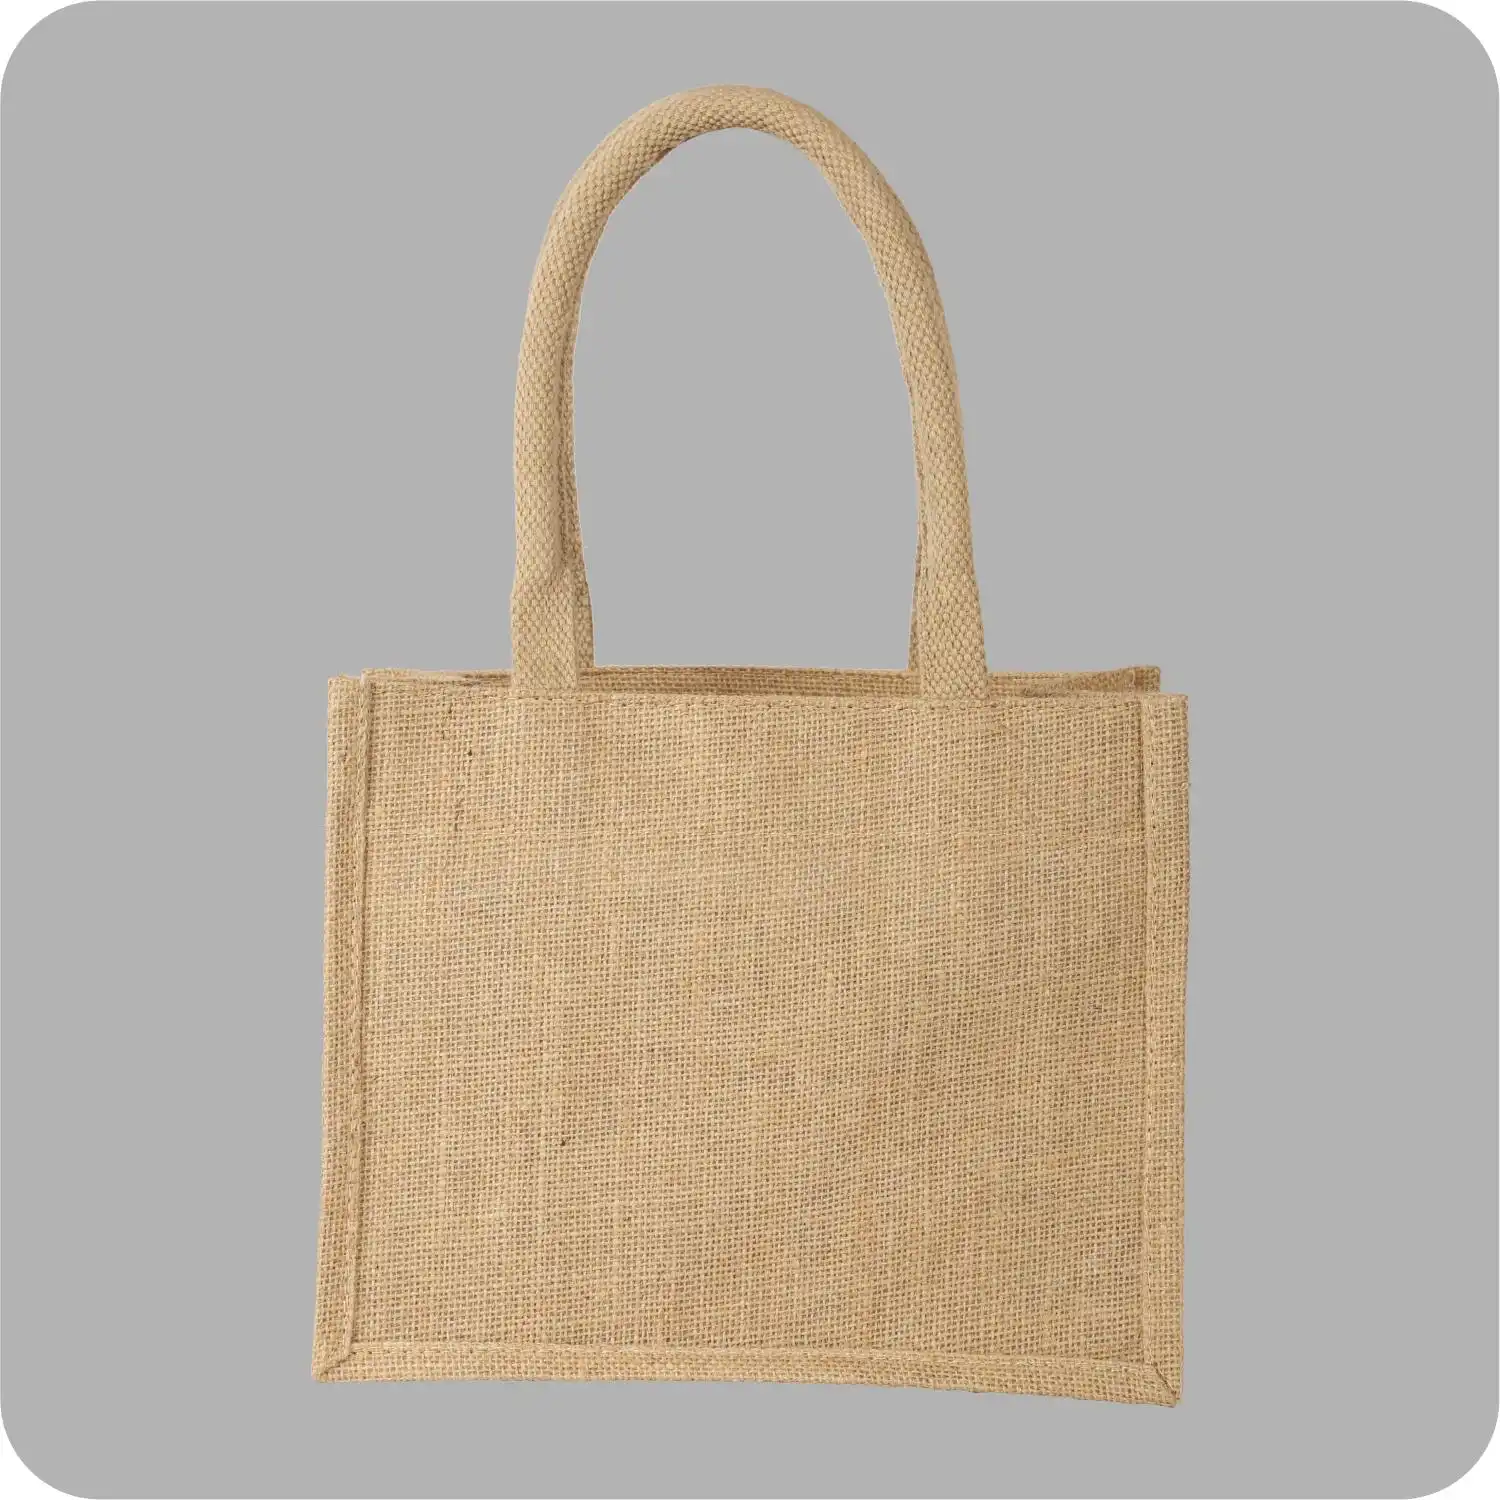 Bohemian, Eco friendly Jute bags for Multitude Purpose